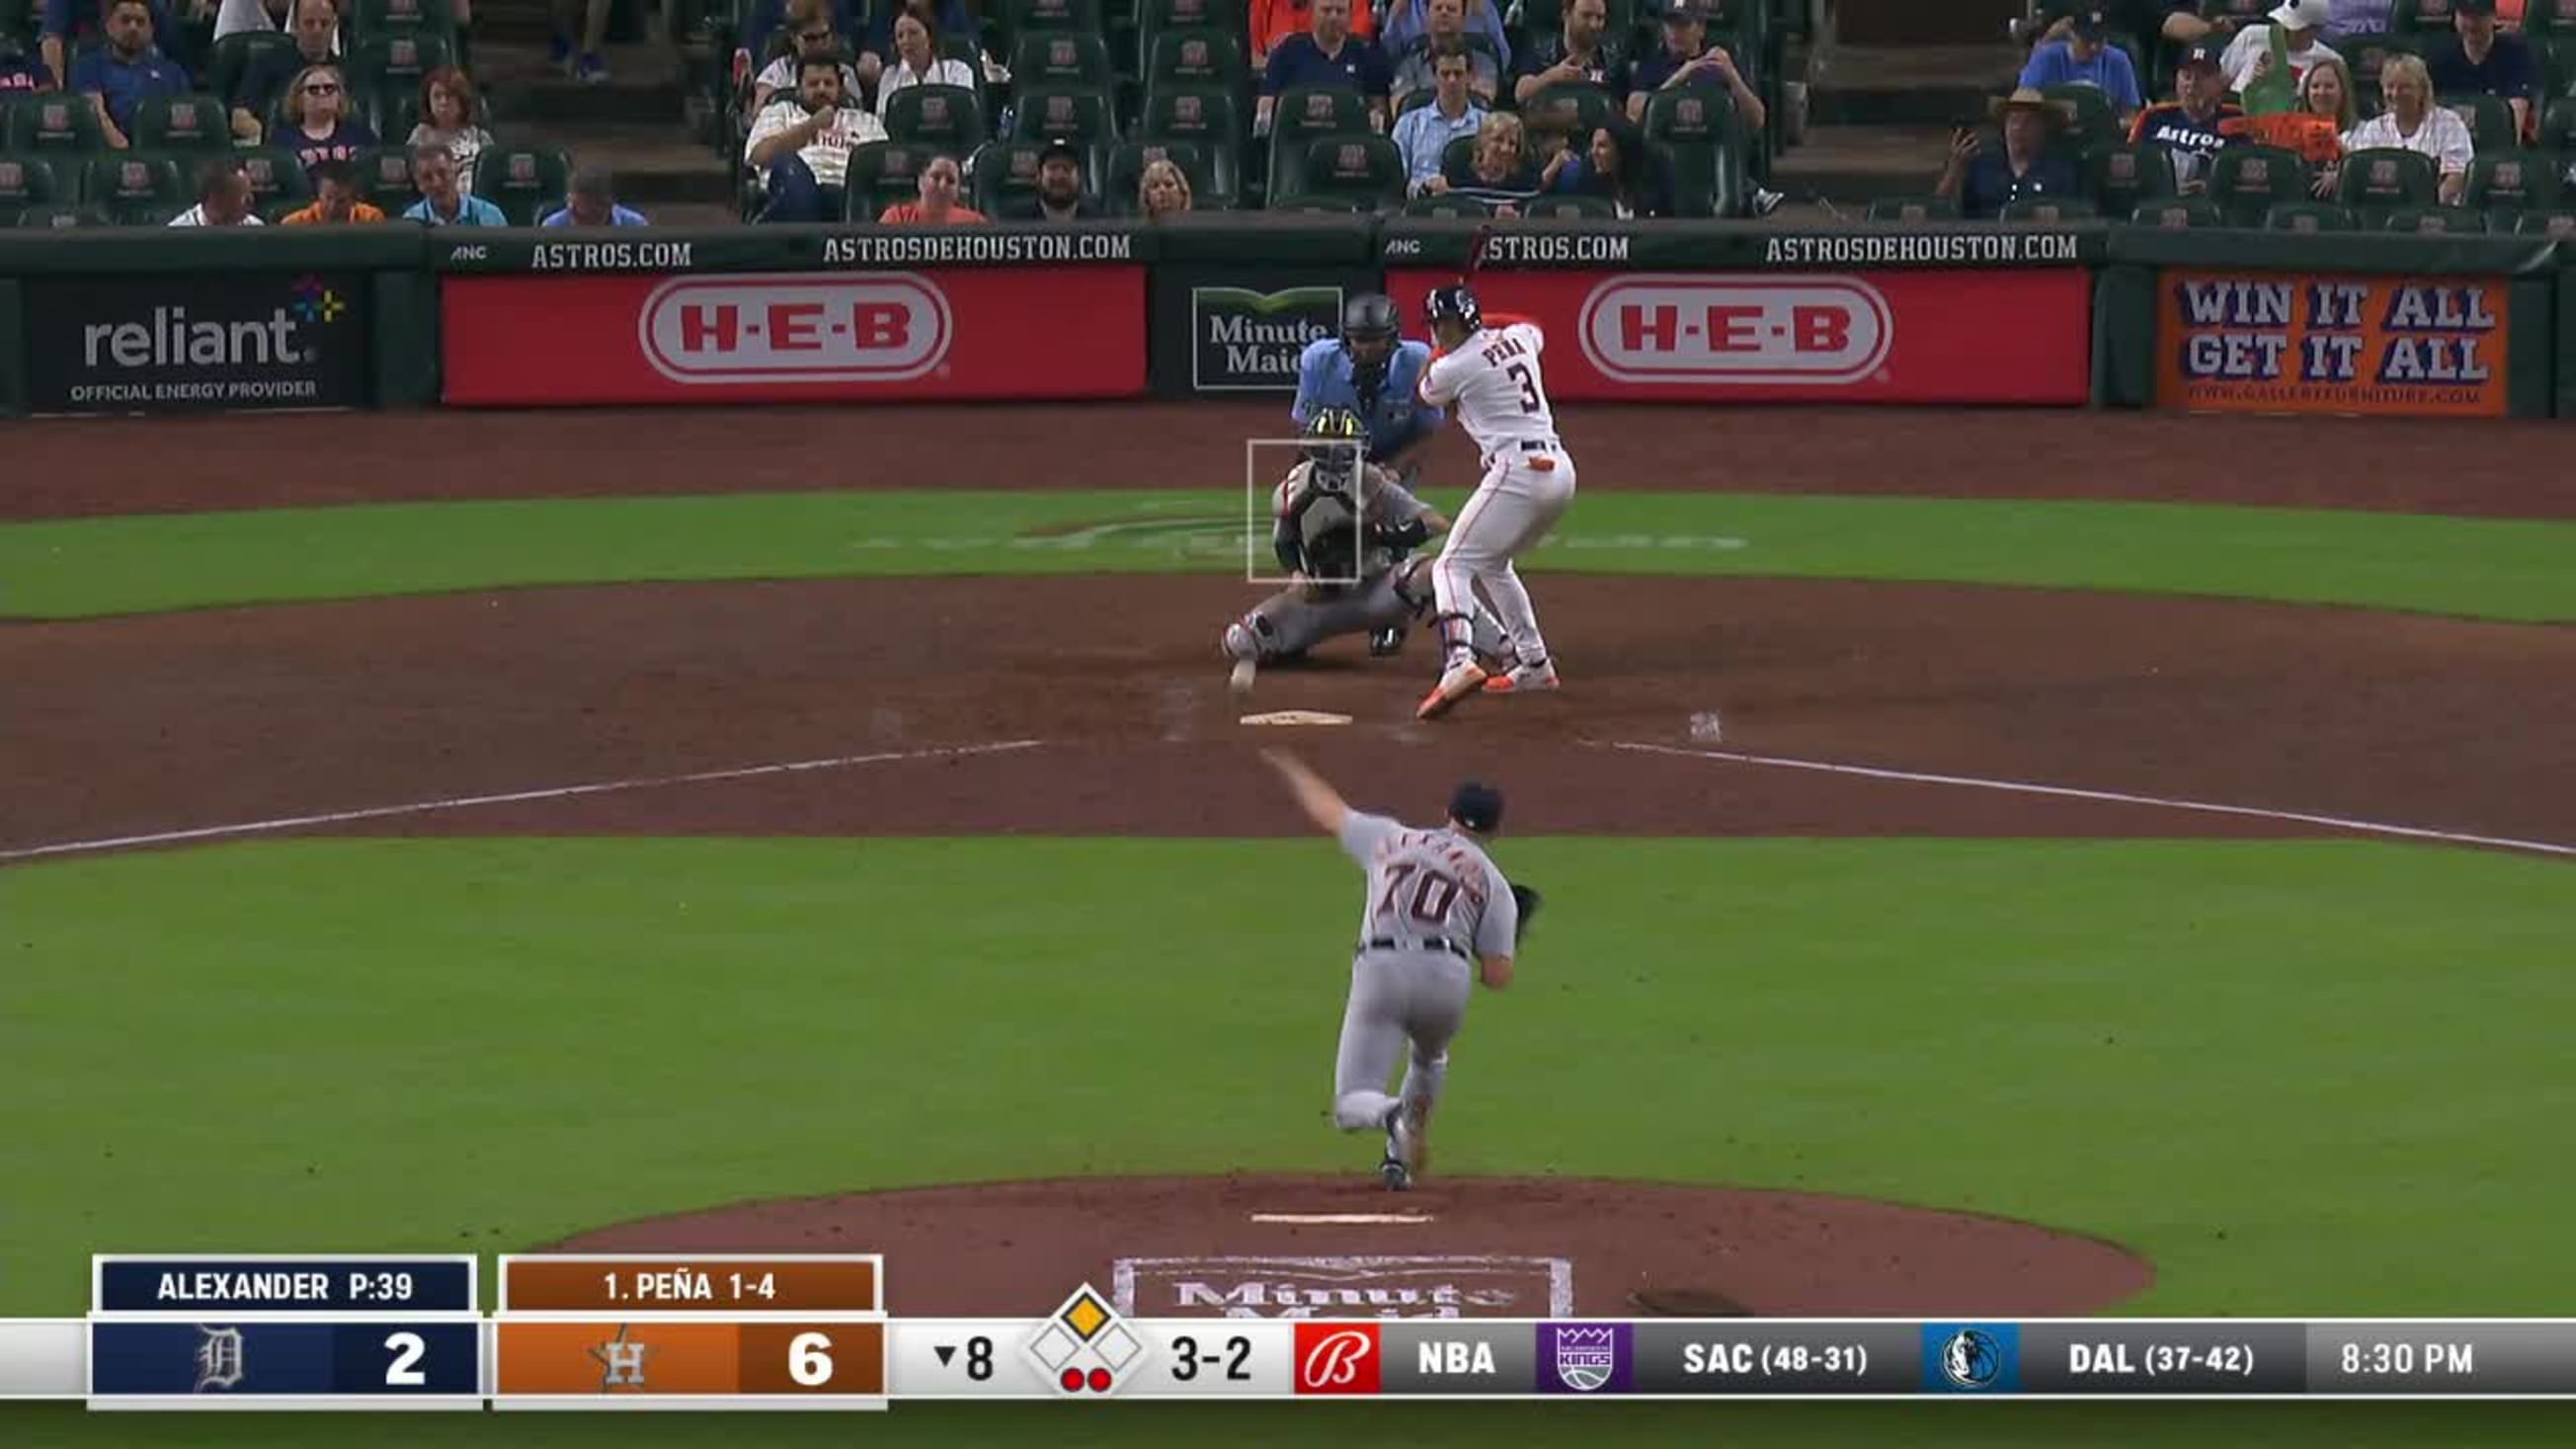 MLB - Jeremy Peña has had an impressive start to his